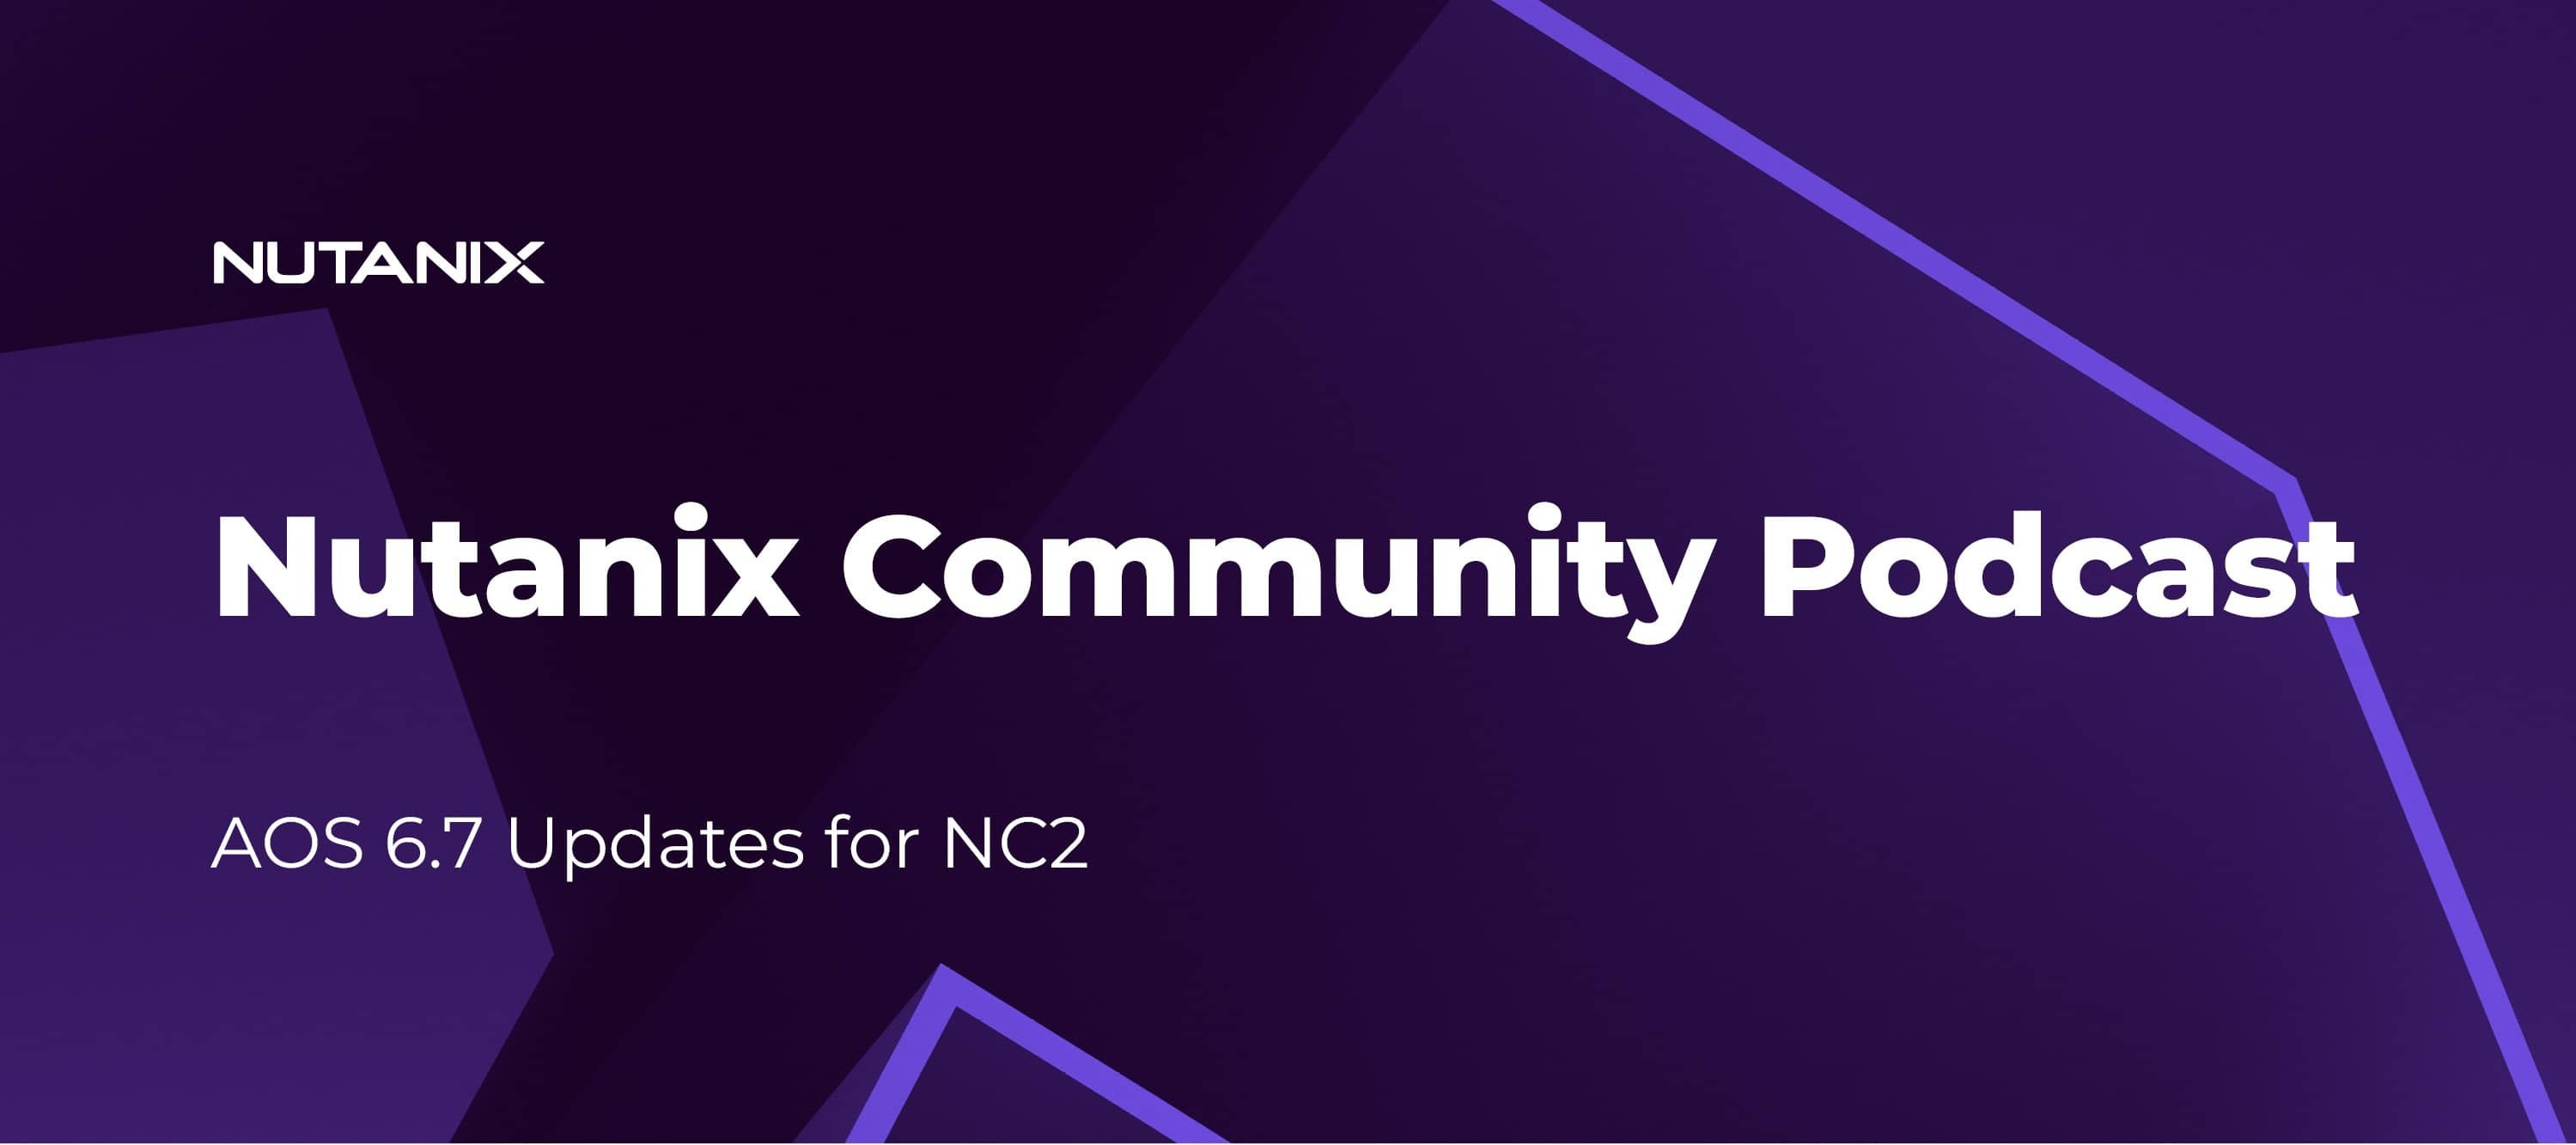 Nutanix Community Podcast: AOS 6.7 Updates for NC2